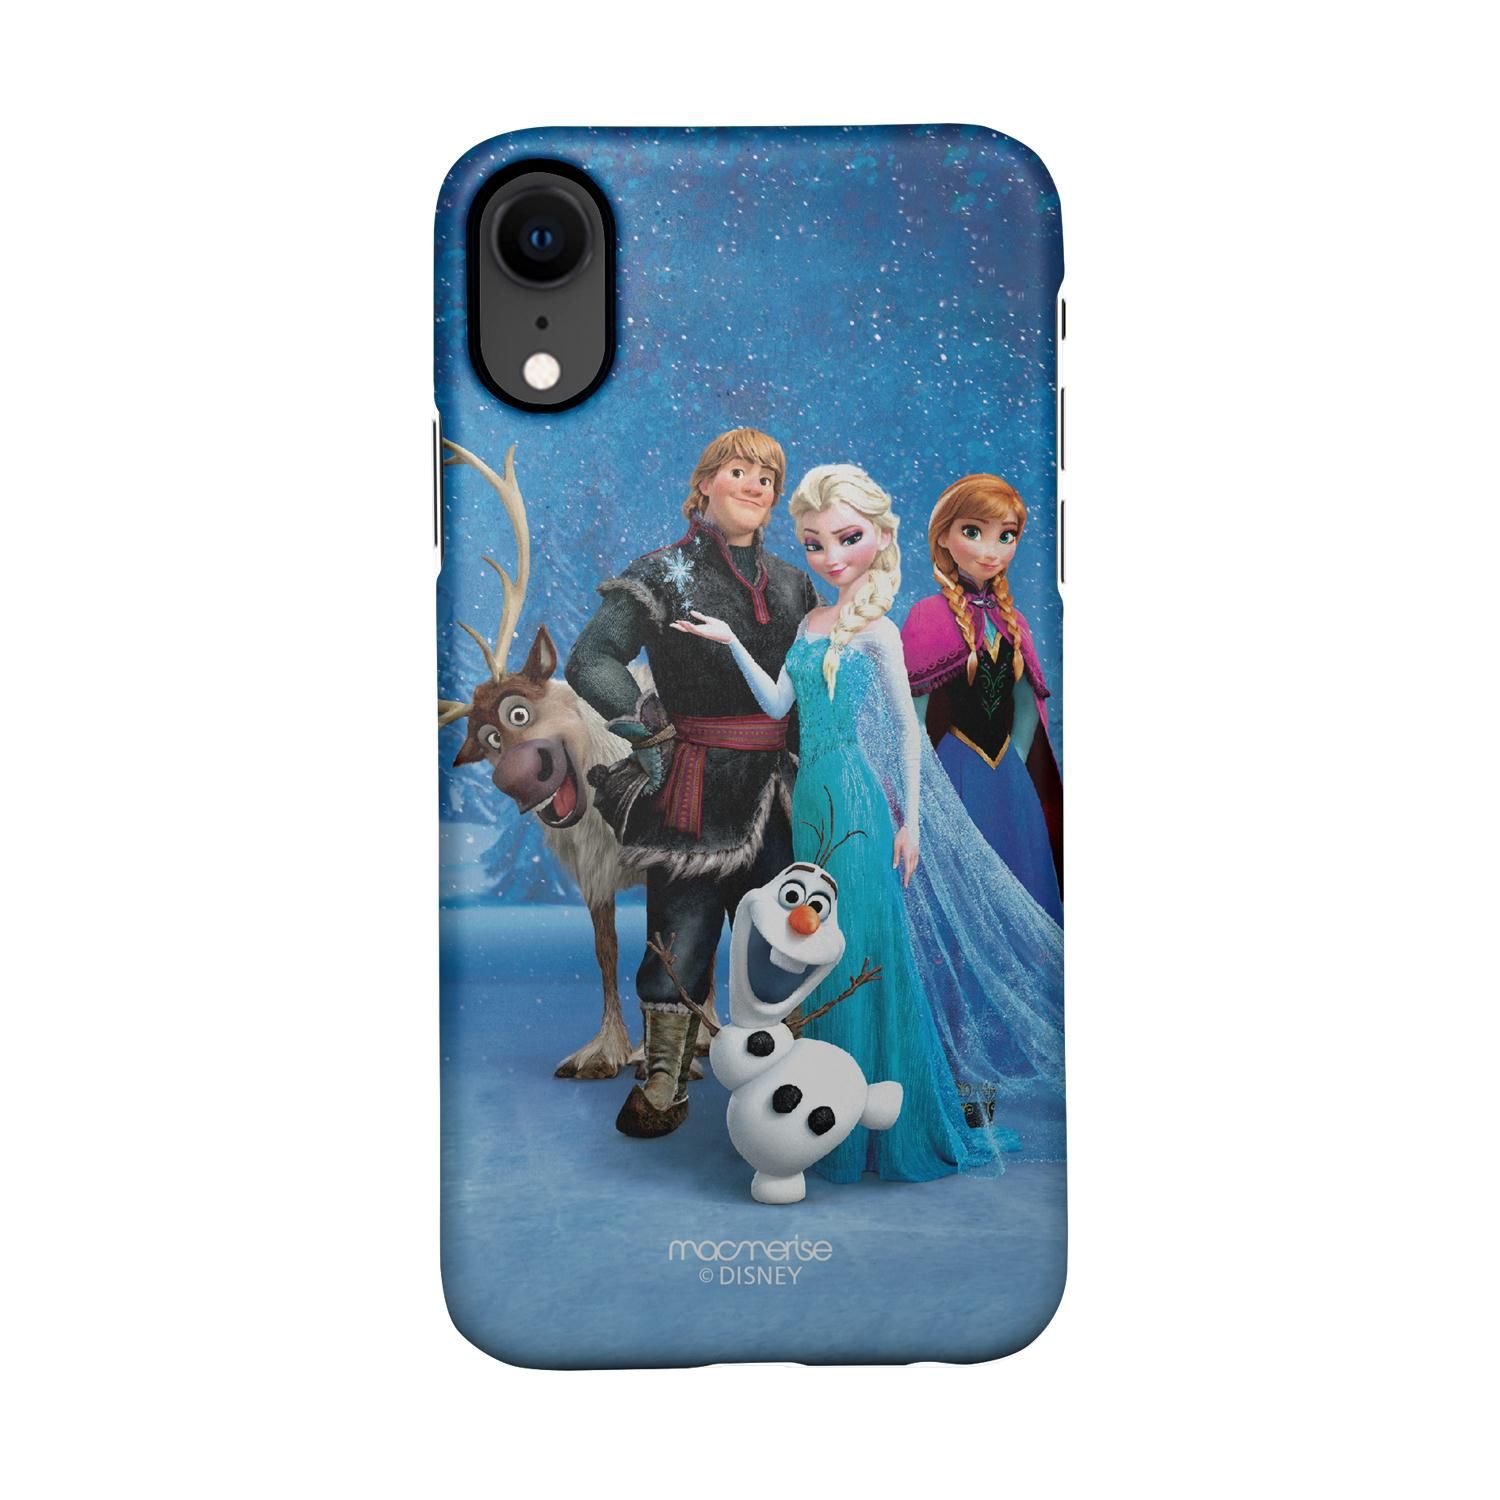 Buy Frozen together - Sleek Phone Case for iPhone XR Online